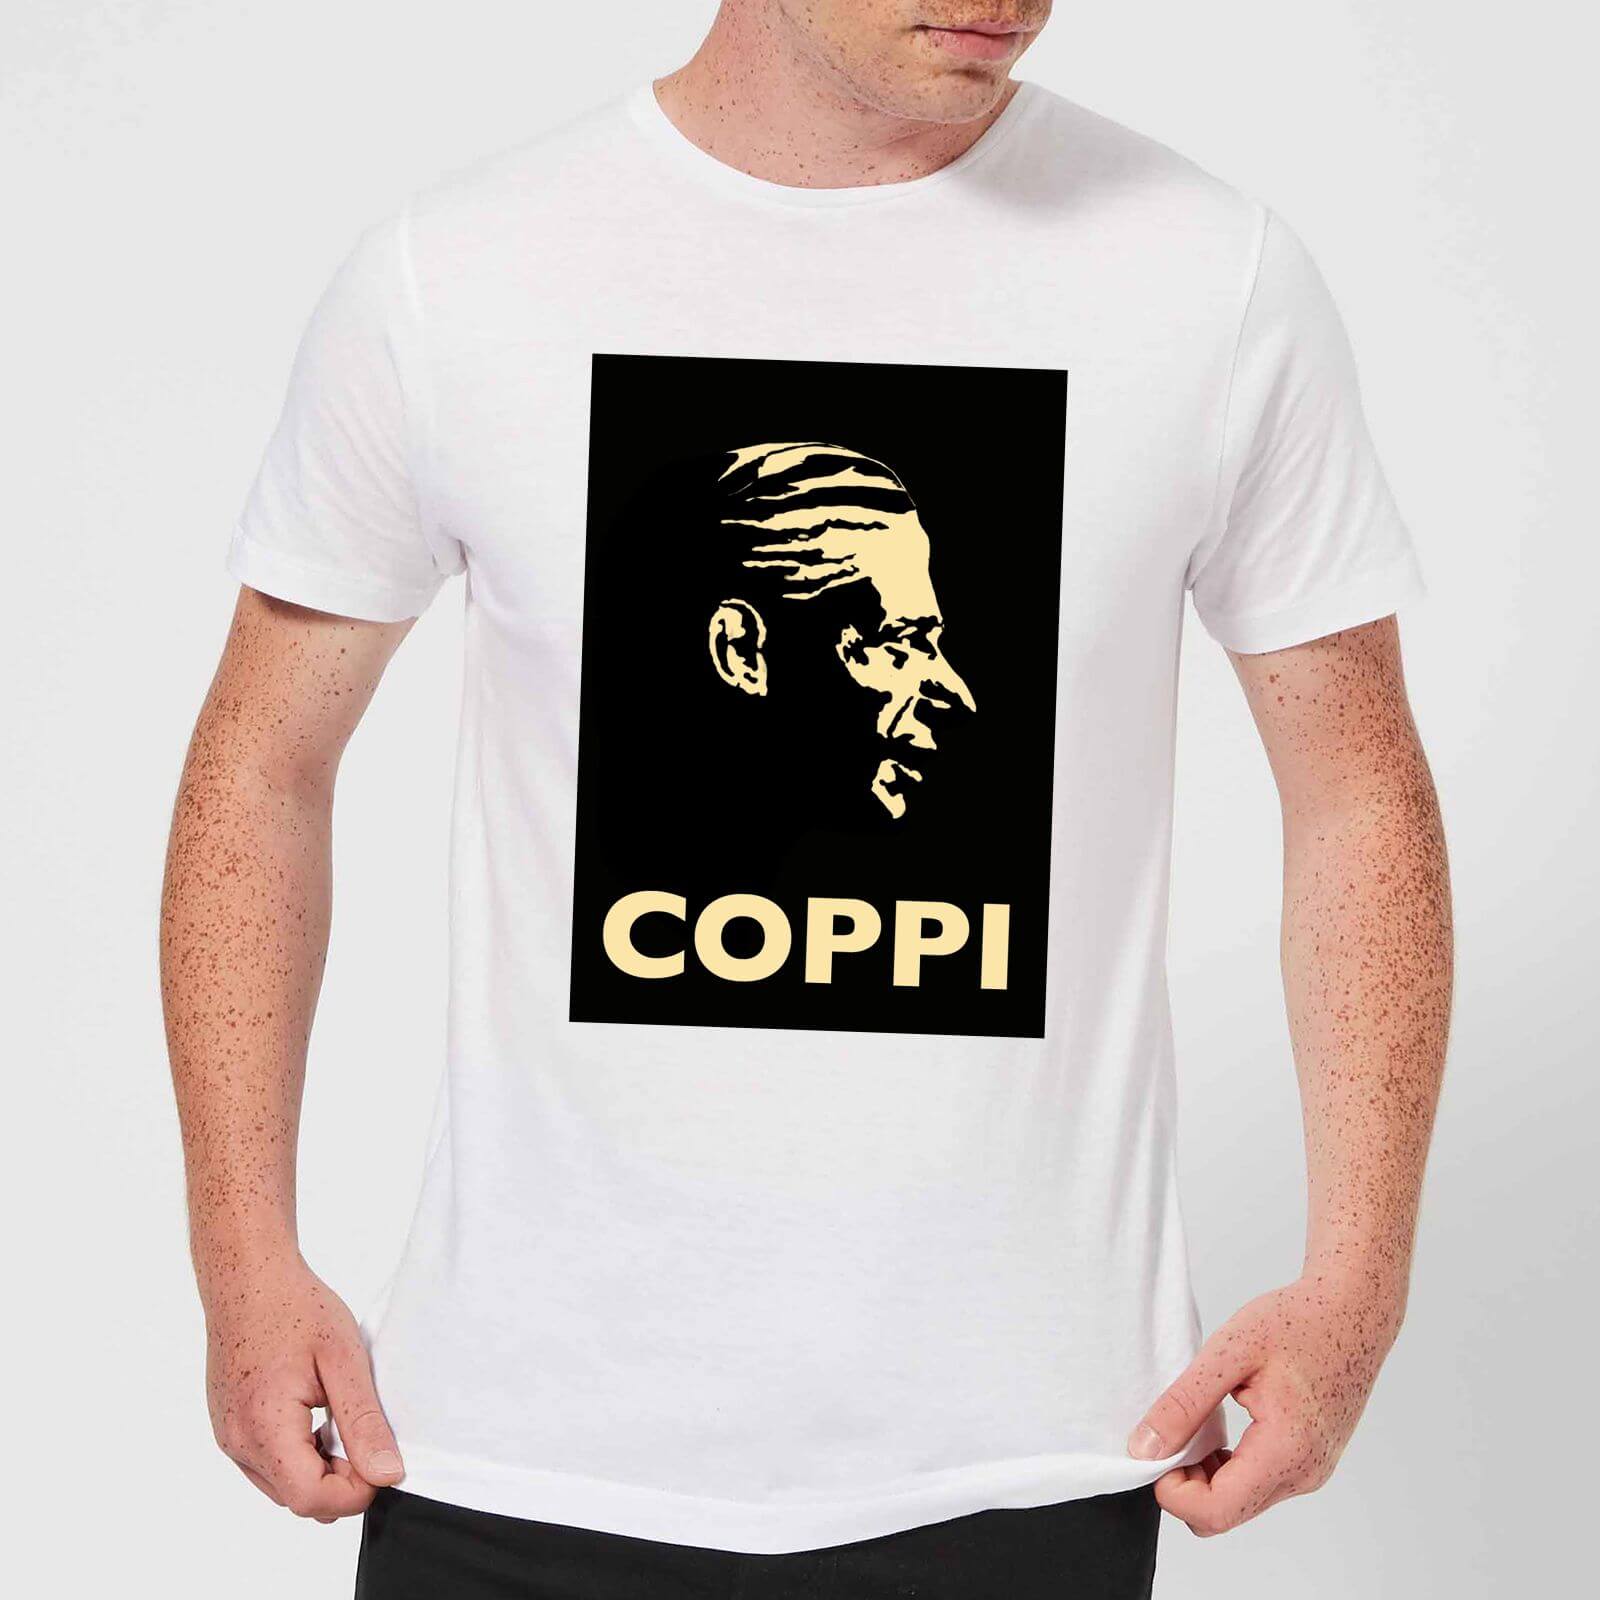 Mark Fairhurst Coppi Men's T-Shirt - White - S